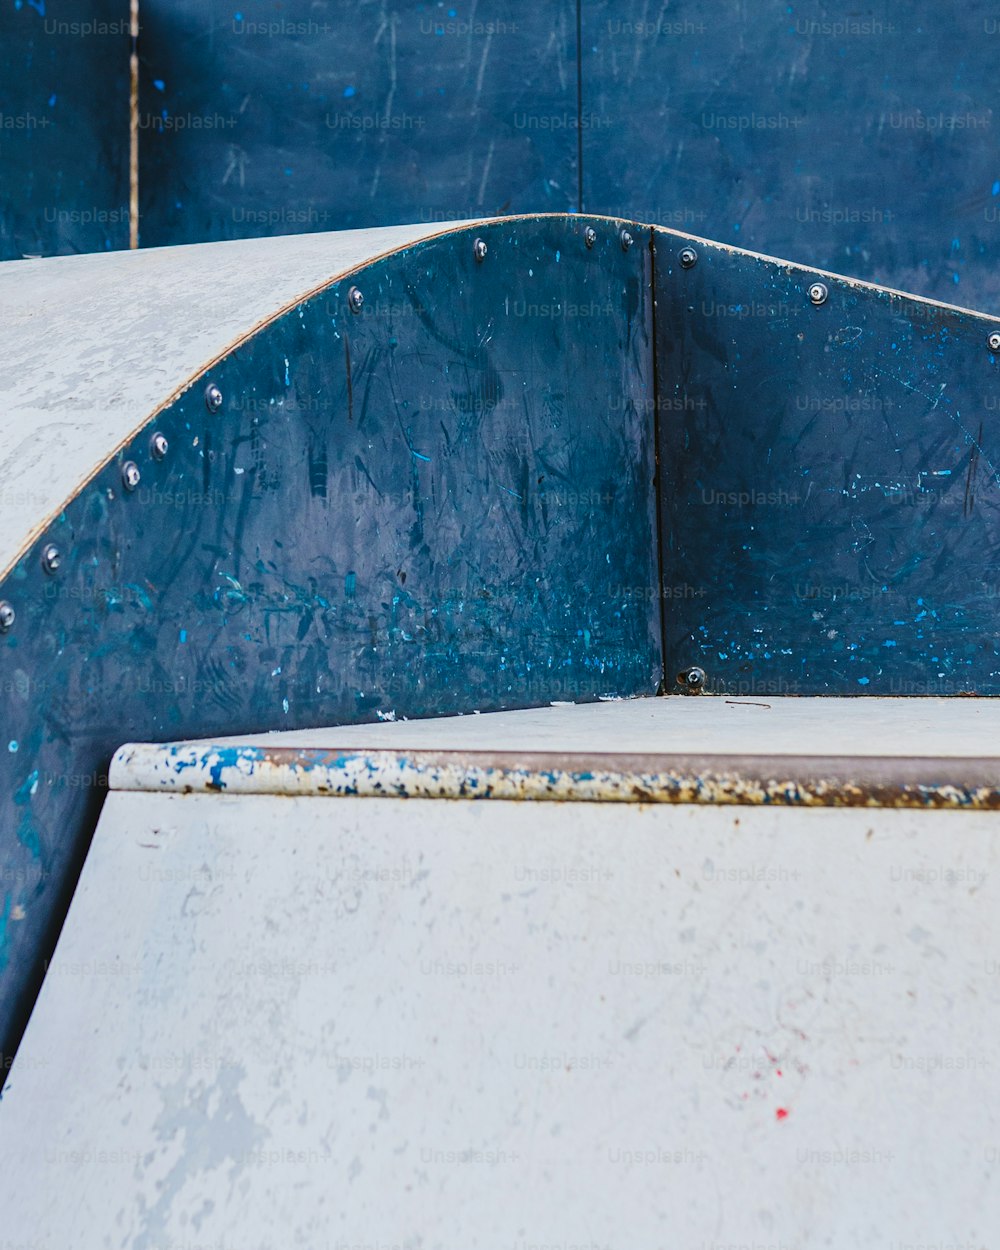 a close up of a skateboard ramp in a skate park